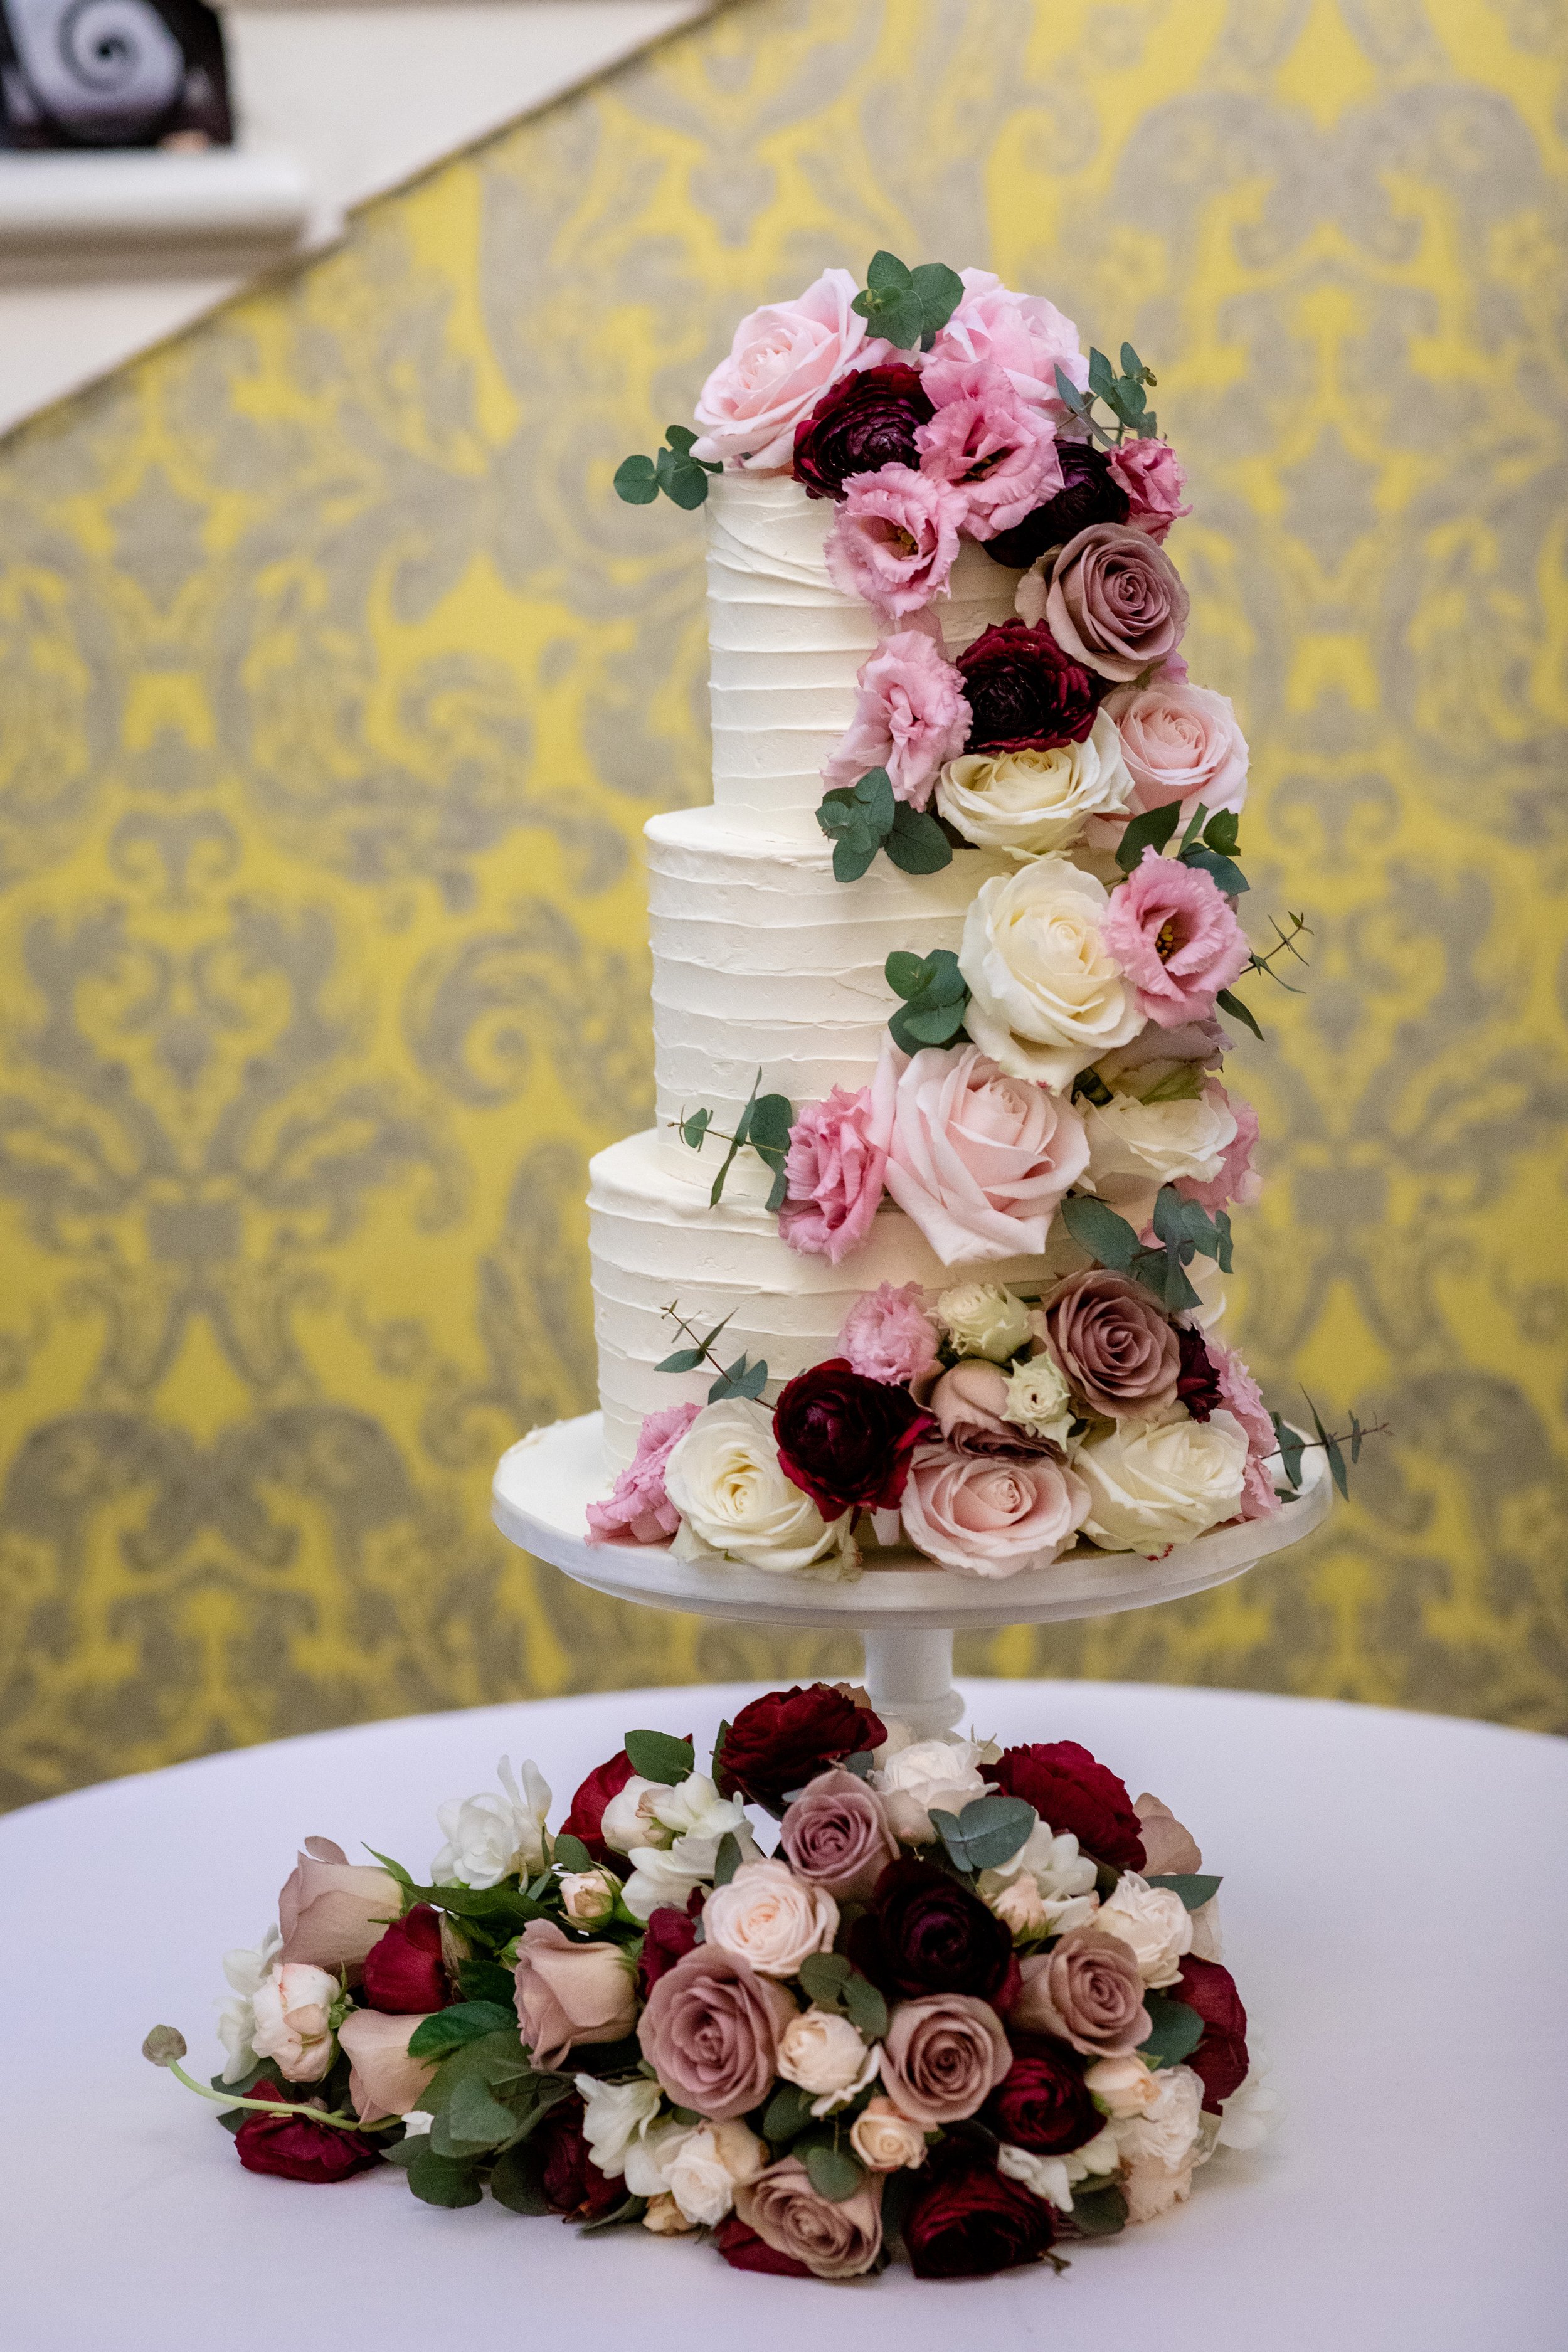 Details about   Pair Couple-Wedding-Cake favors-decorations-marks table show original title